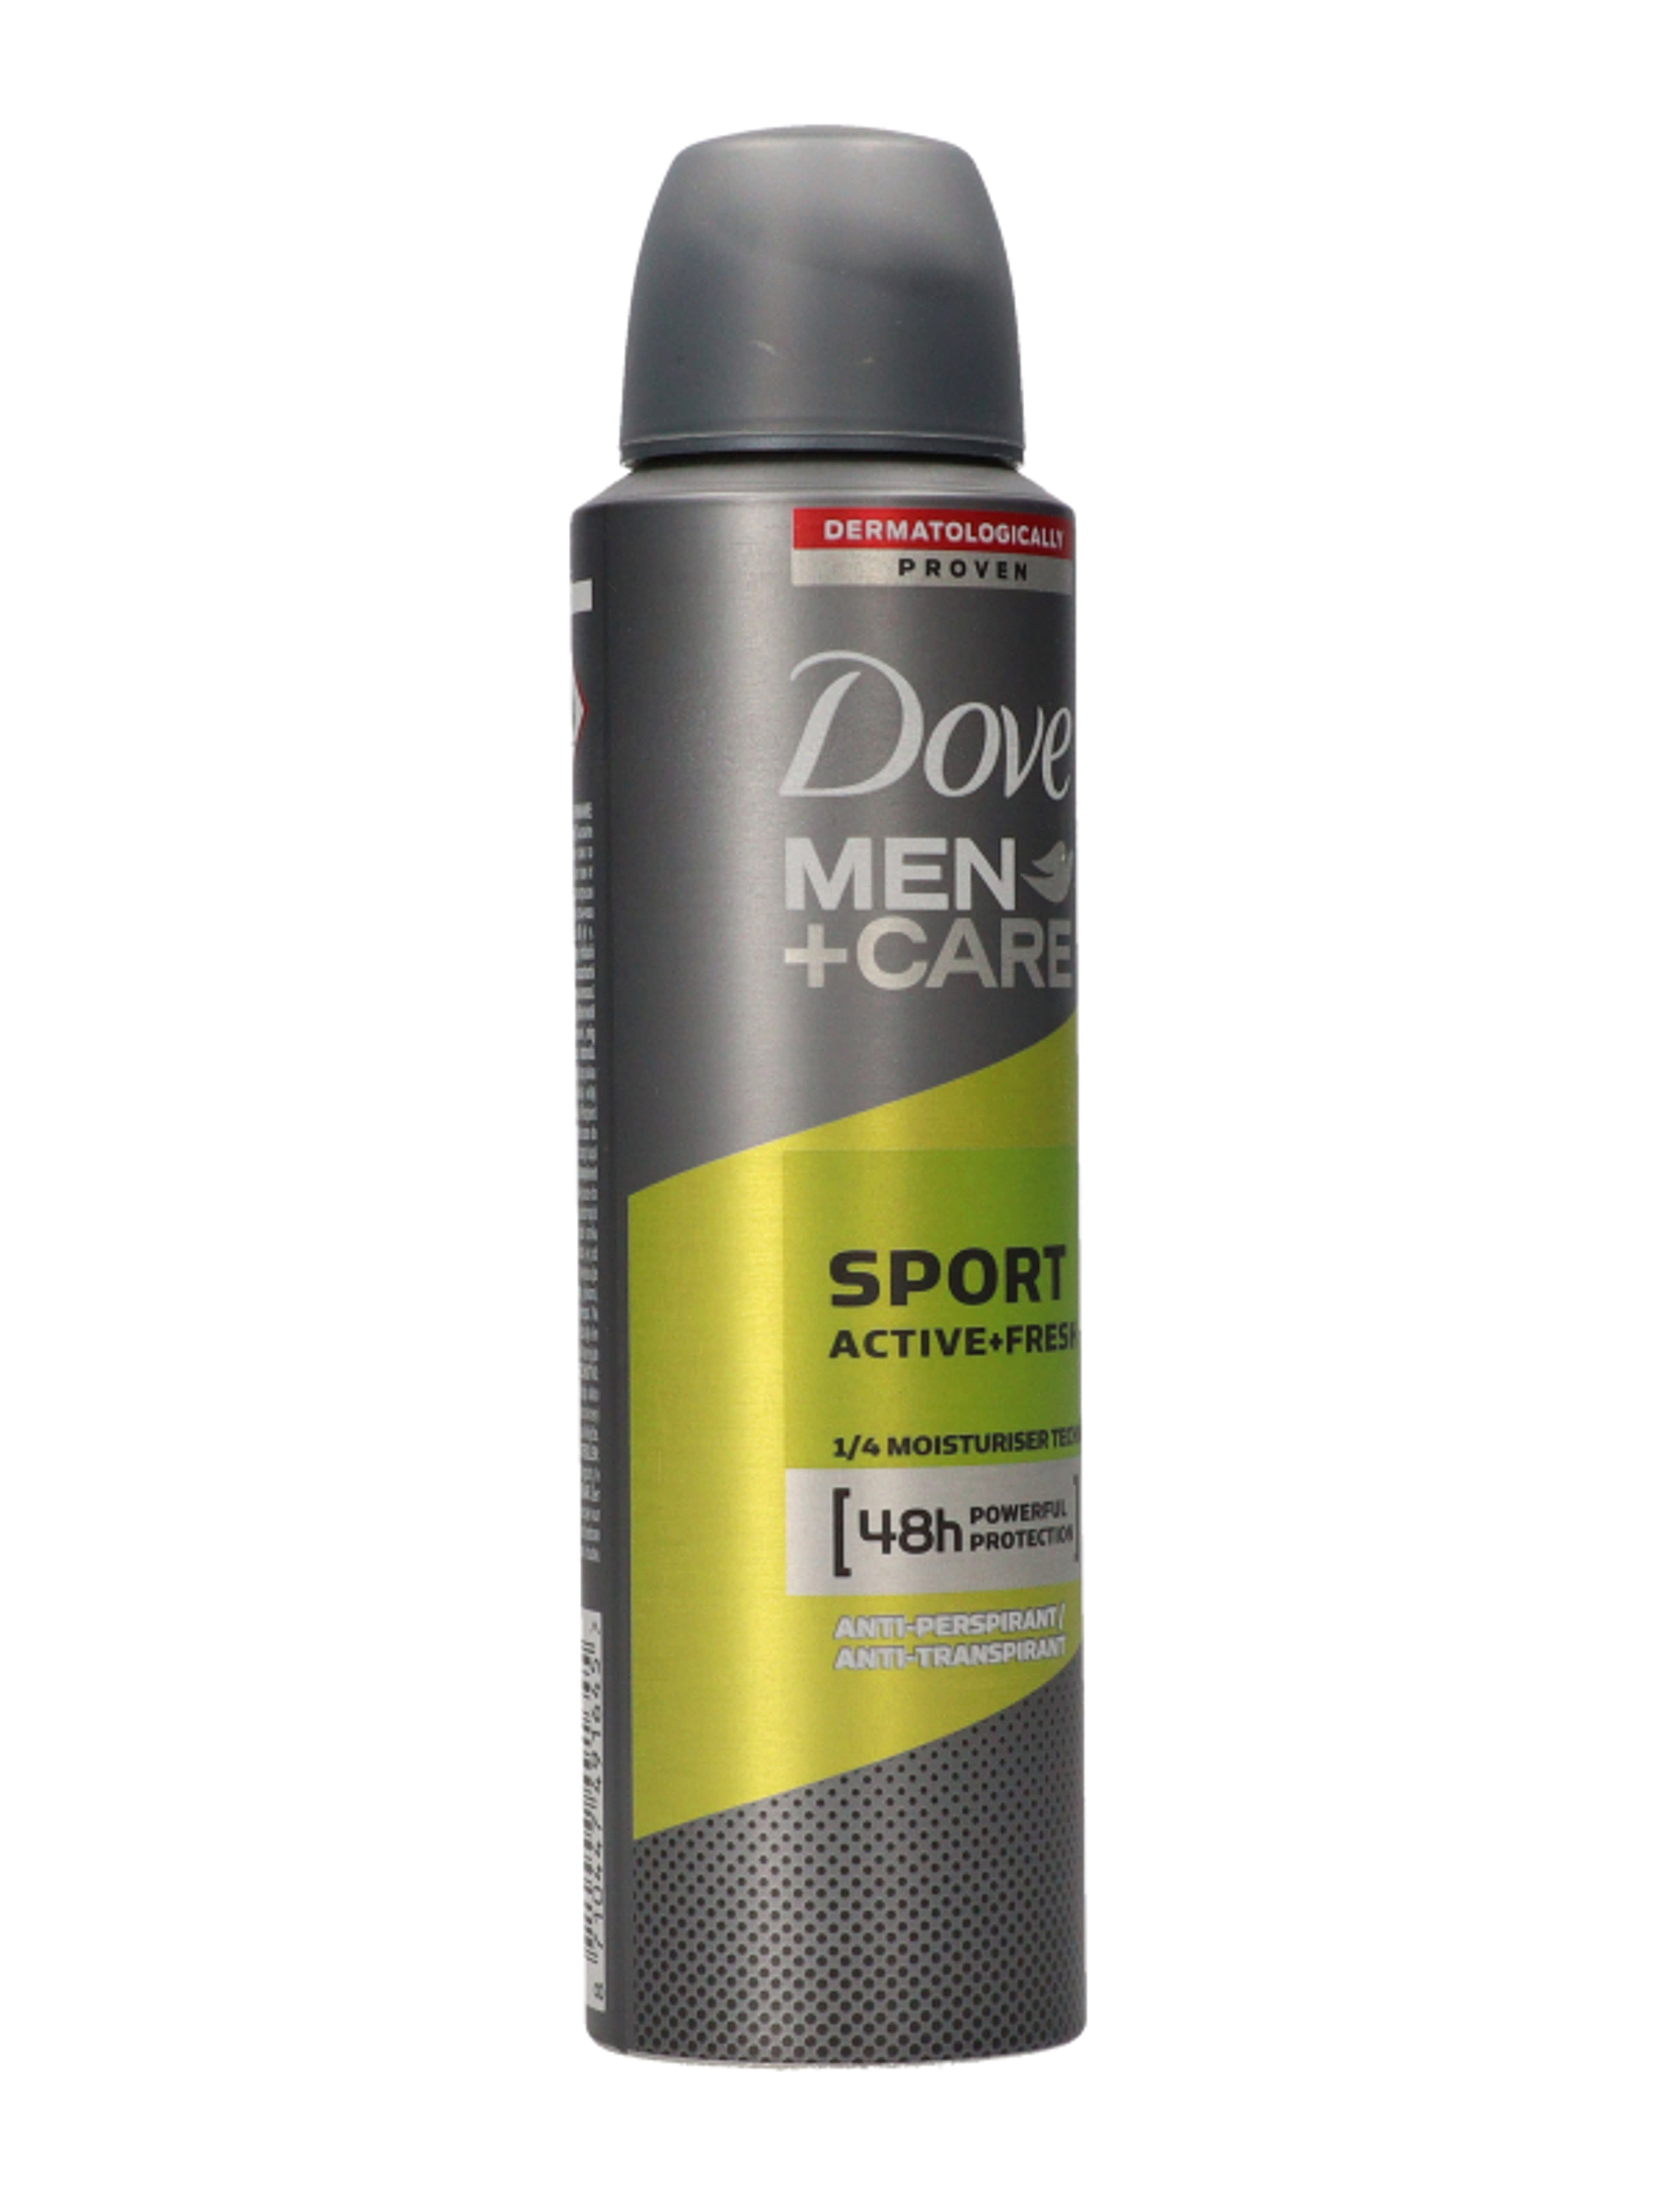 Dove deo men+care sport active fresh - 150 ml-5